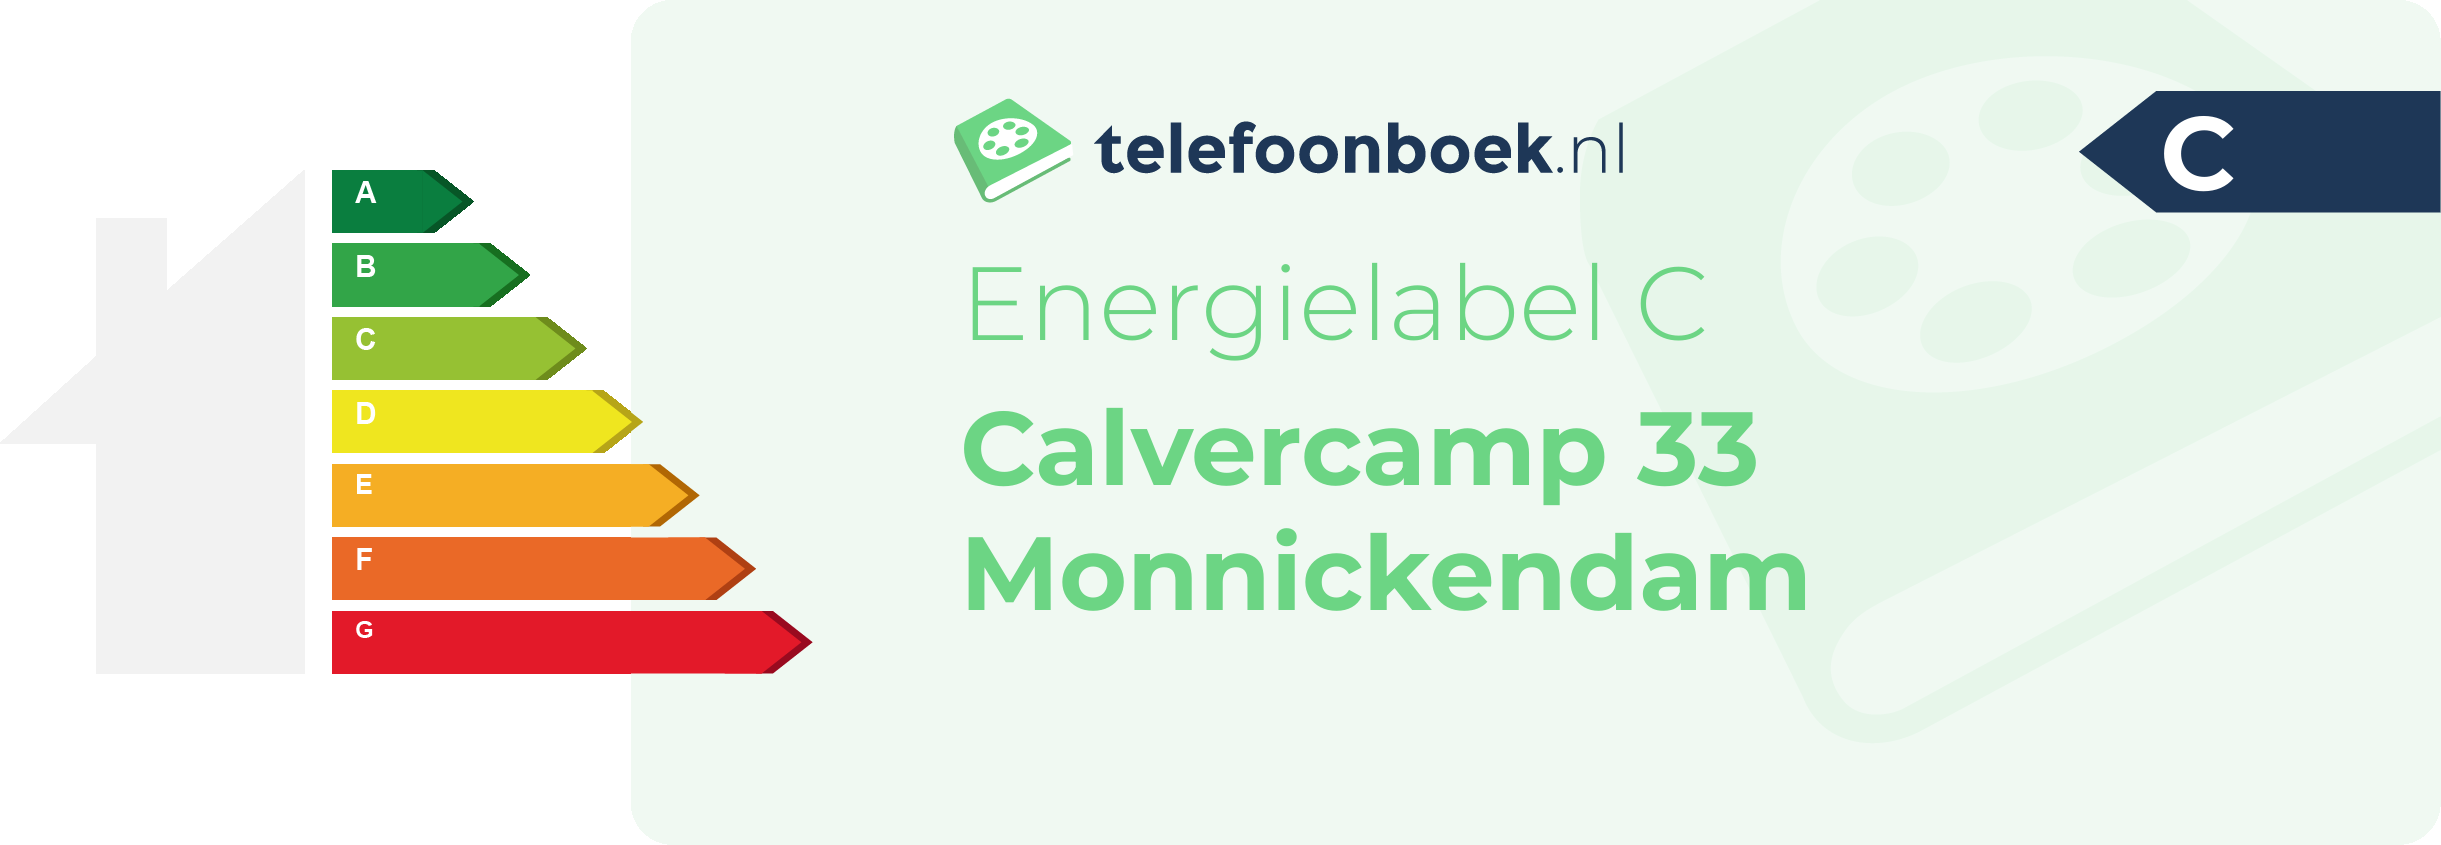 Energielabel Calvercamp 33 Monnickendam